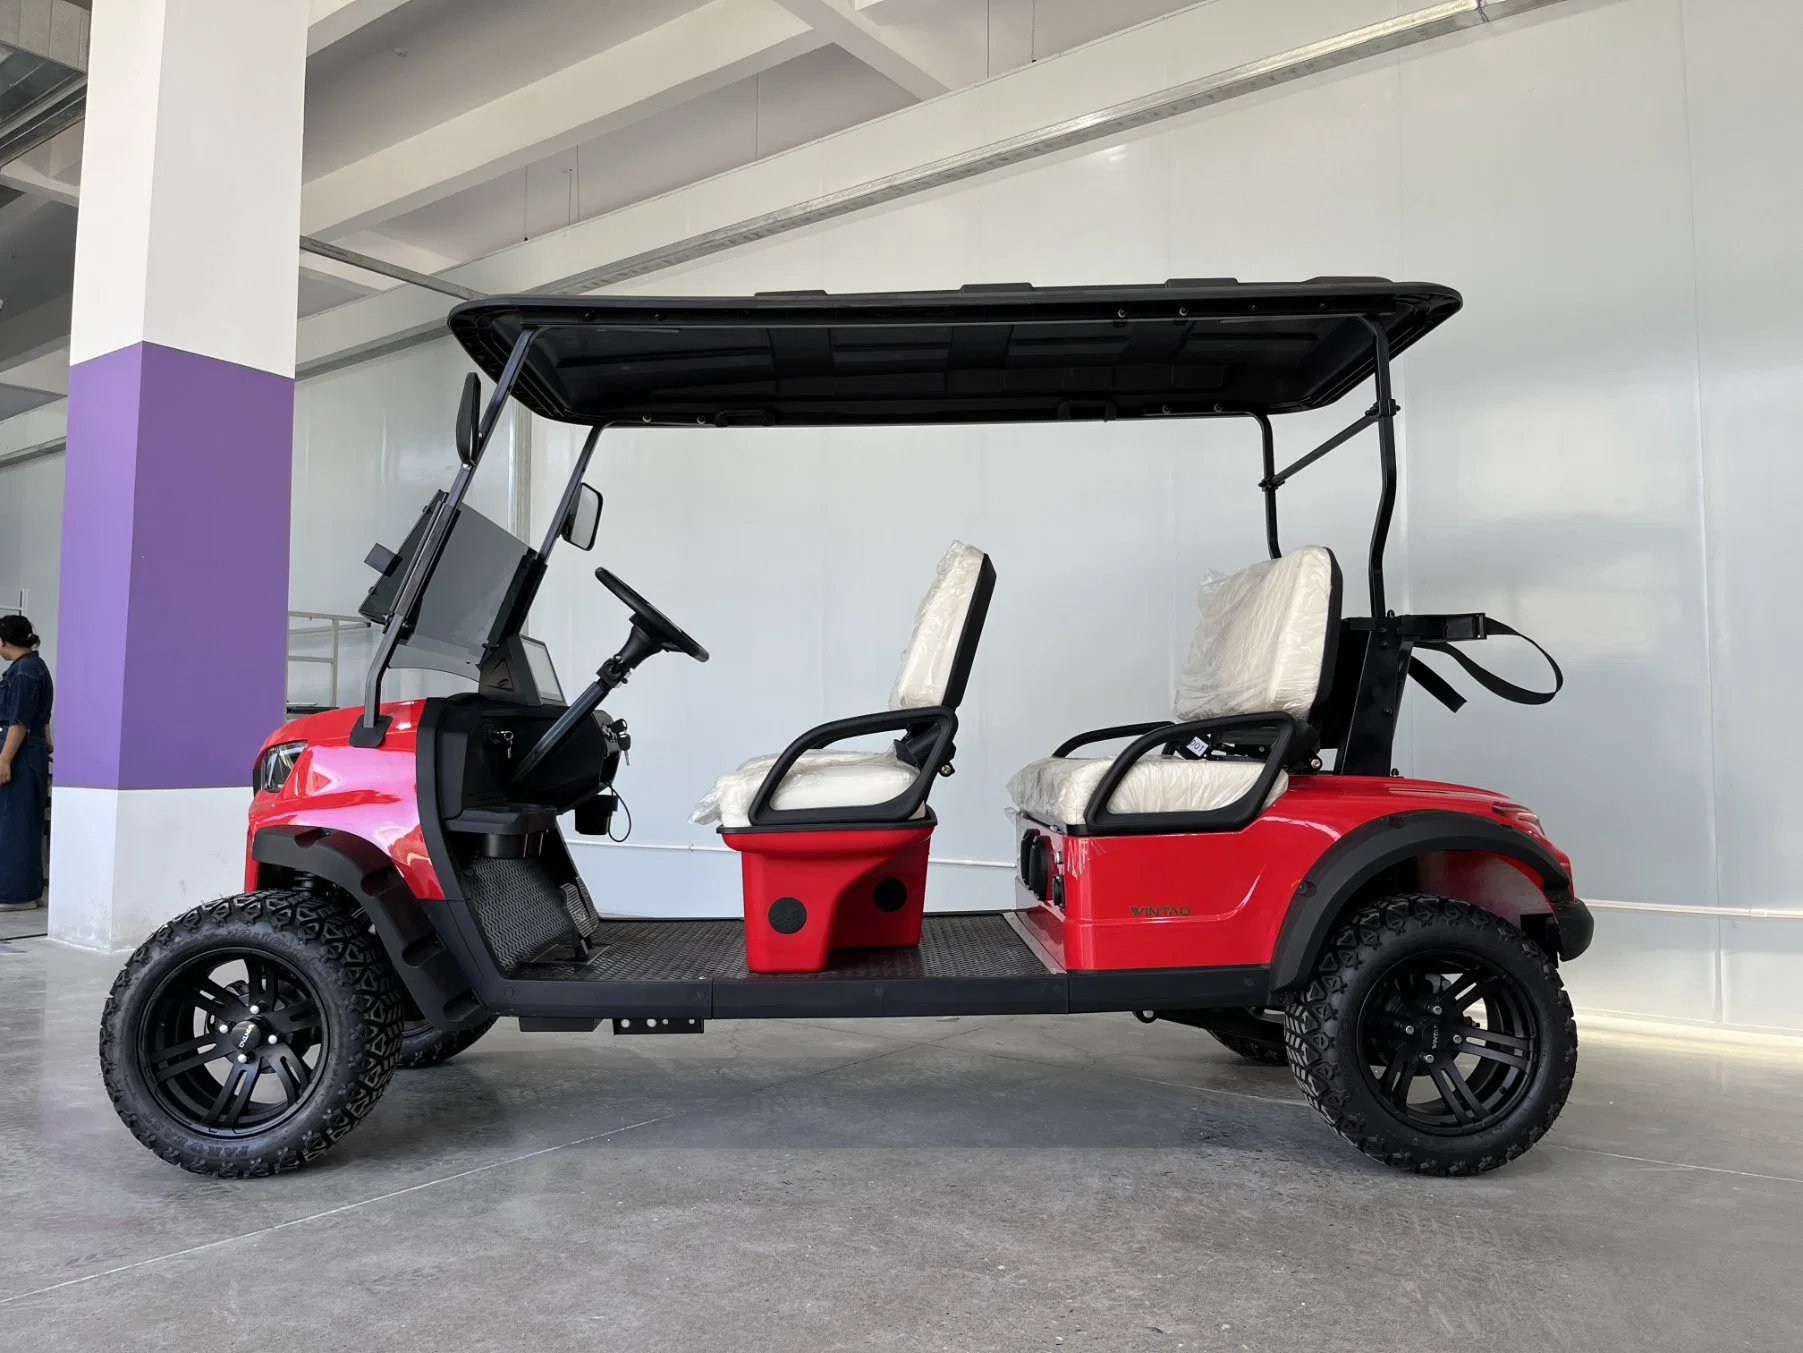 Wintao Latest Model 4 Seats Golf Cart Electric Golf Car